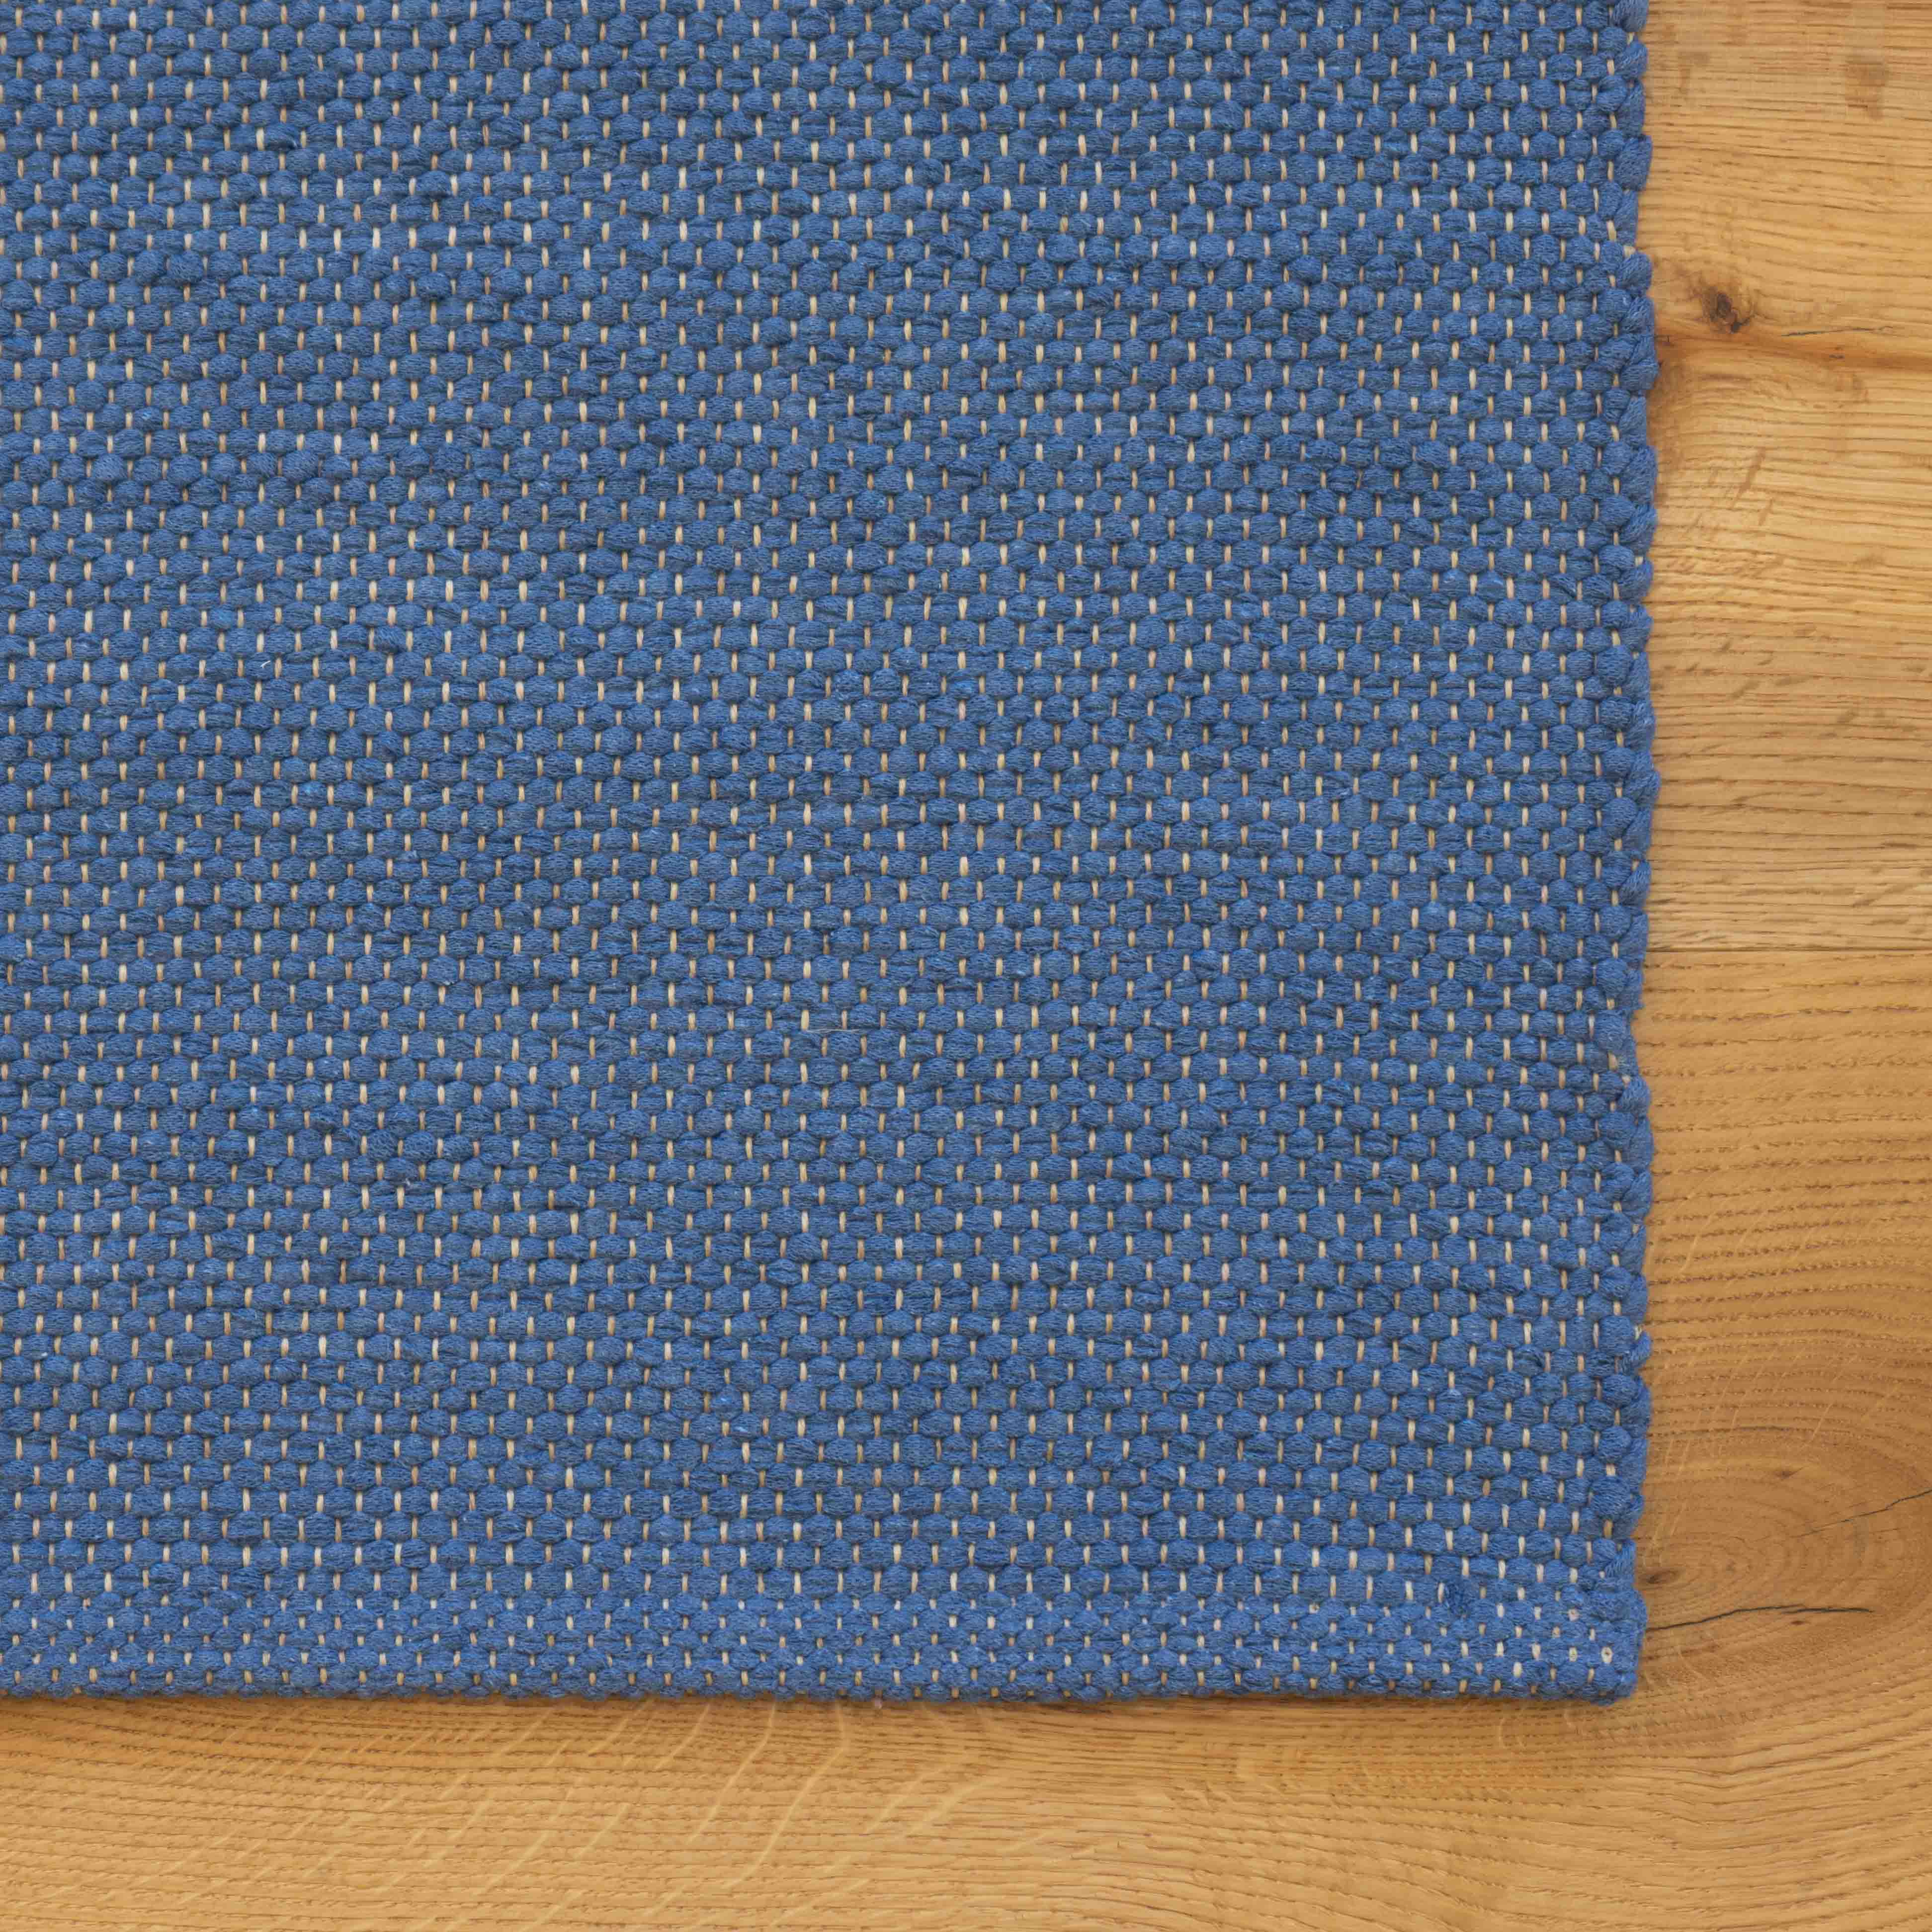 Baumwolle blau - Teppichmuster